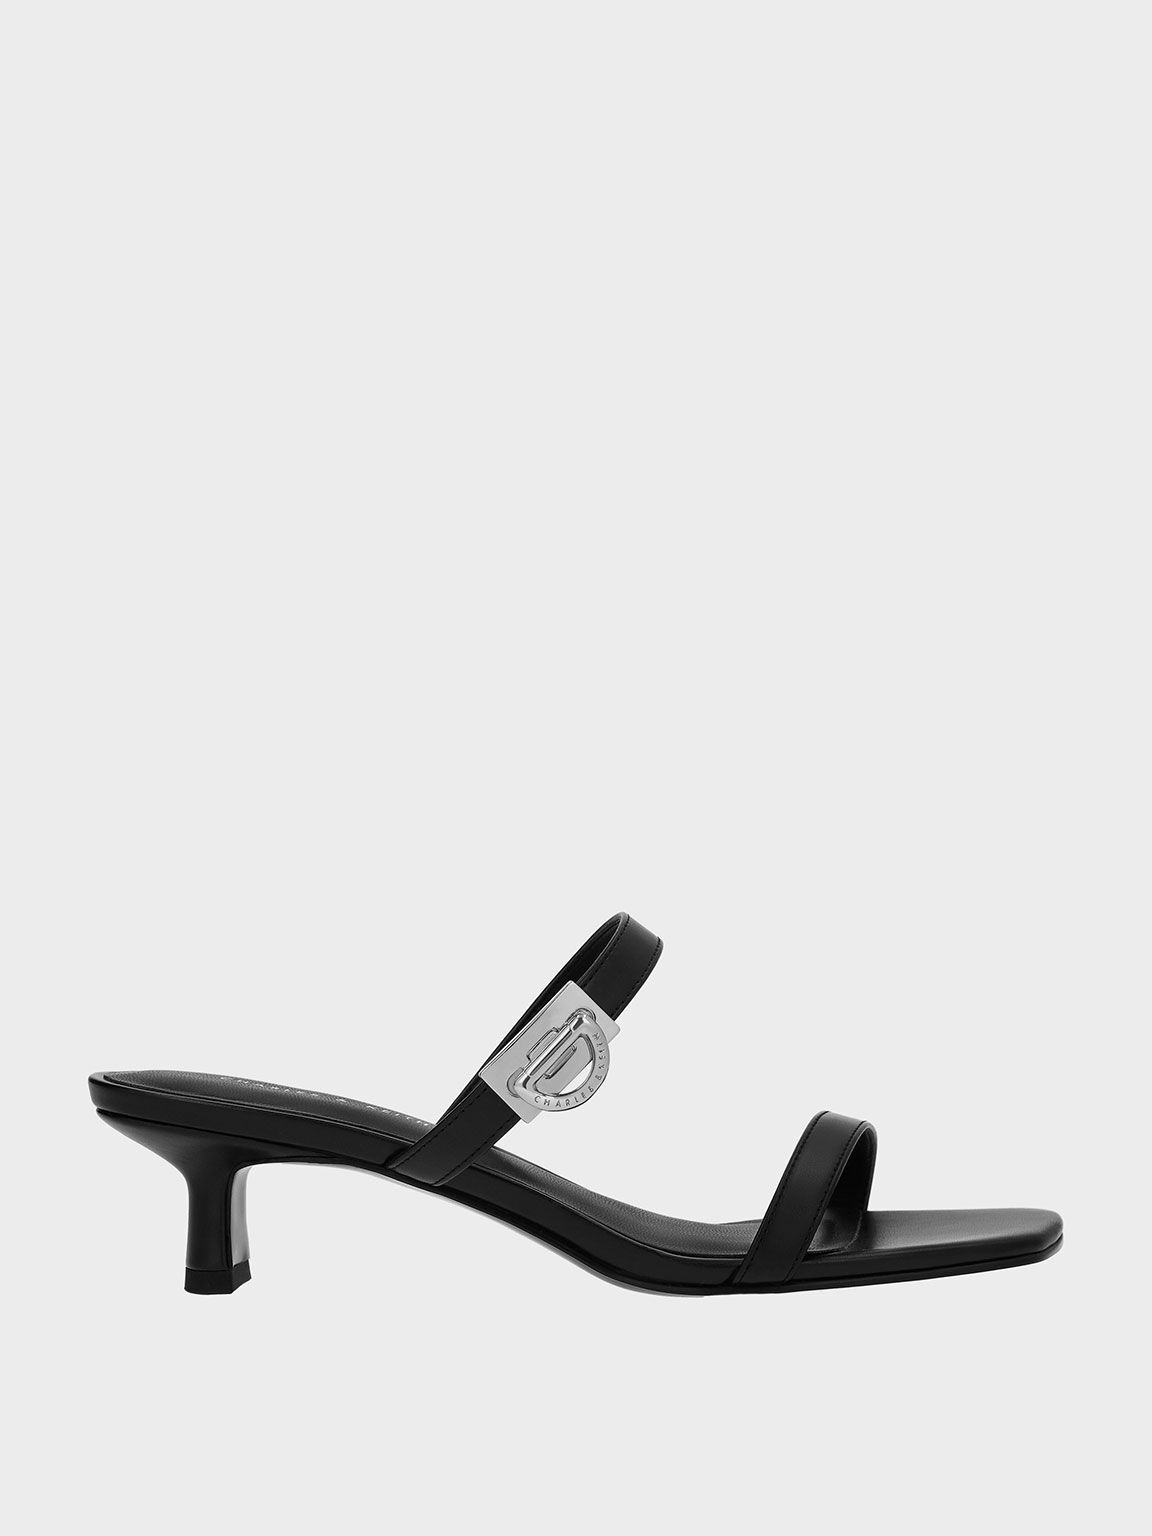 Double Strap Metallic Accent Sandals, Black, hi-res